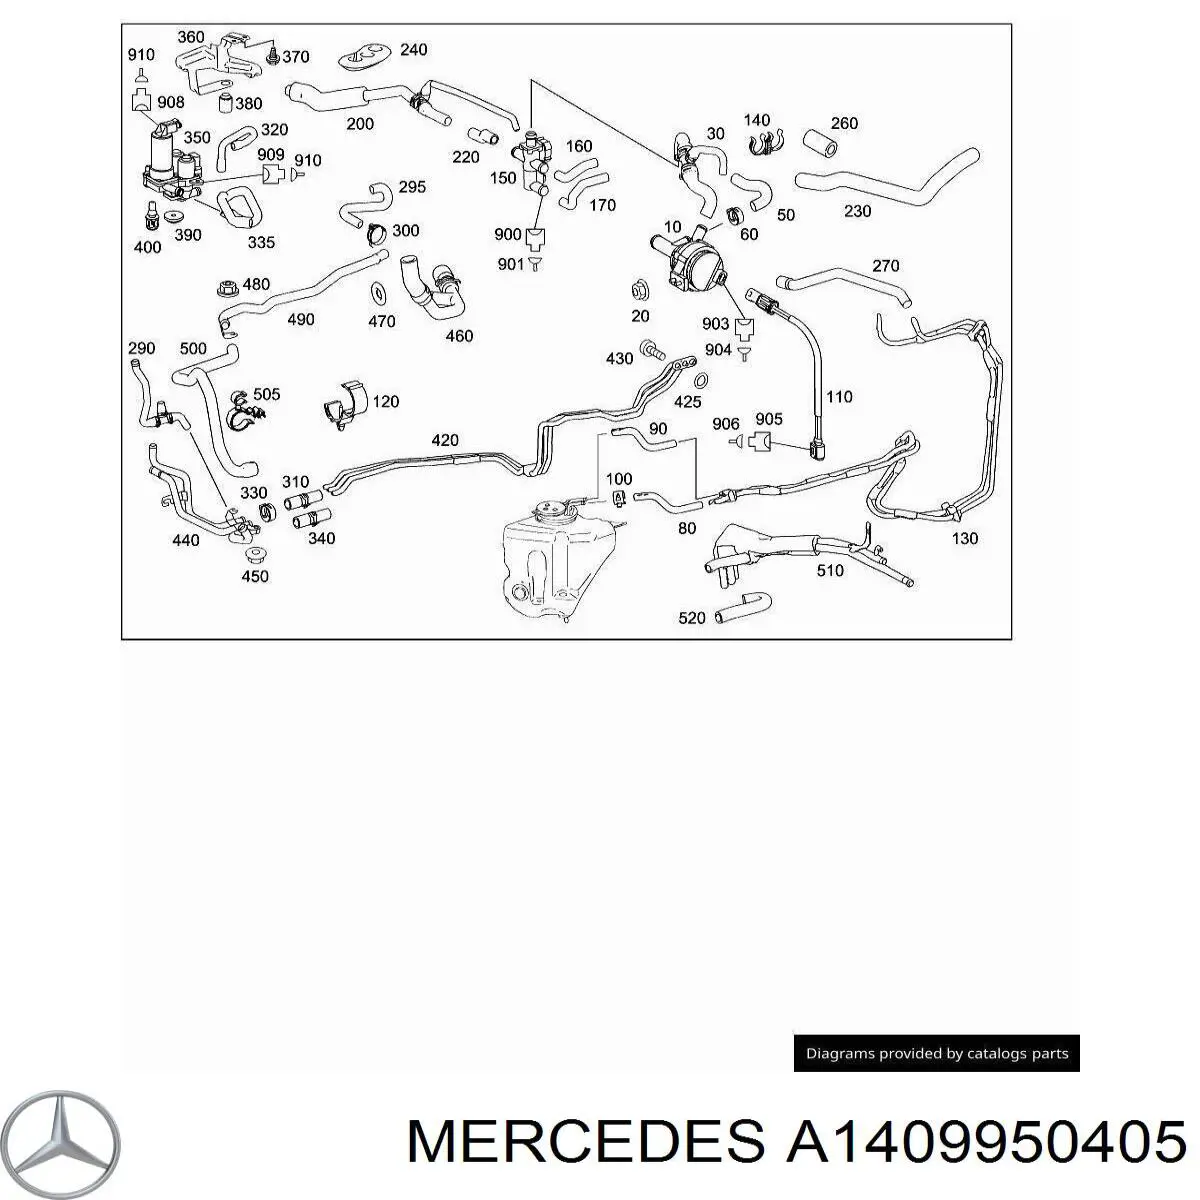 A1409950405 Mercedes